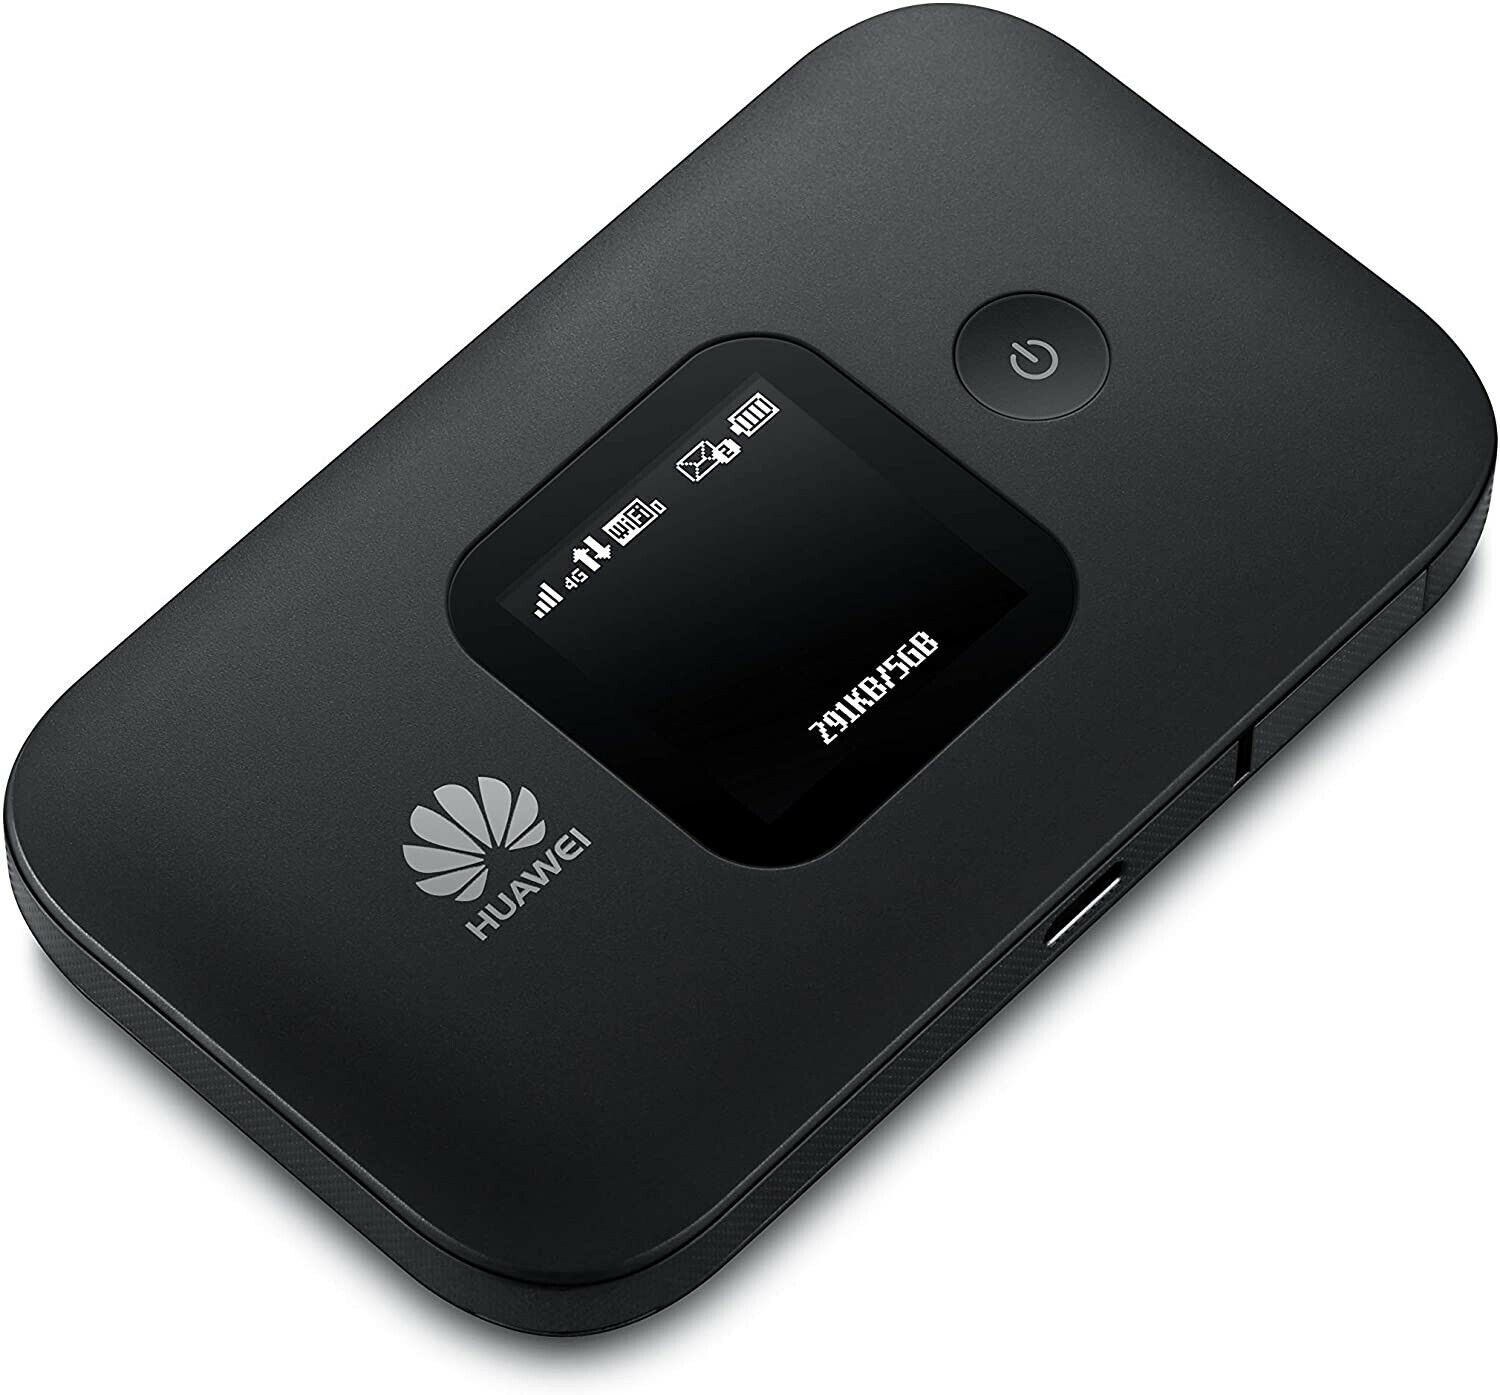 Huawei E5577-320 4G LTE FDD/TDD 150Mbp Modem Mobile WiFi Hotspot Router UNLOCKED